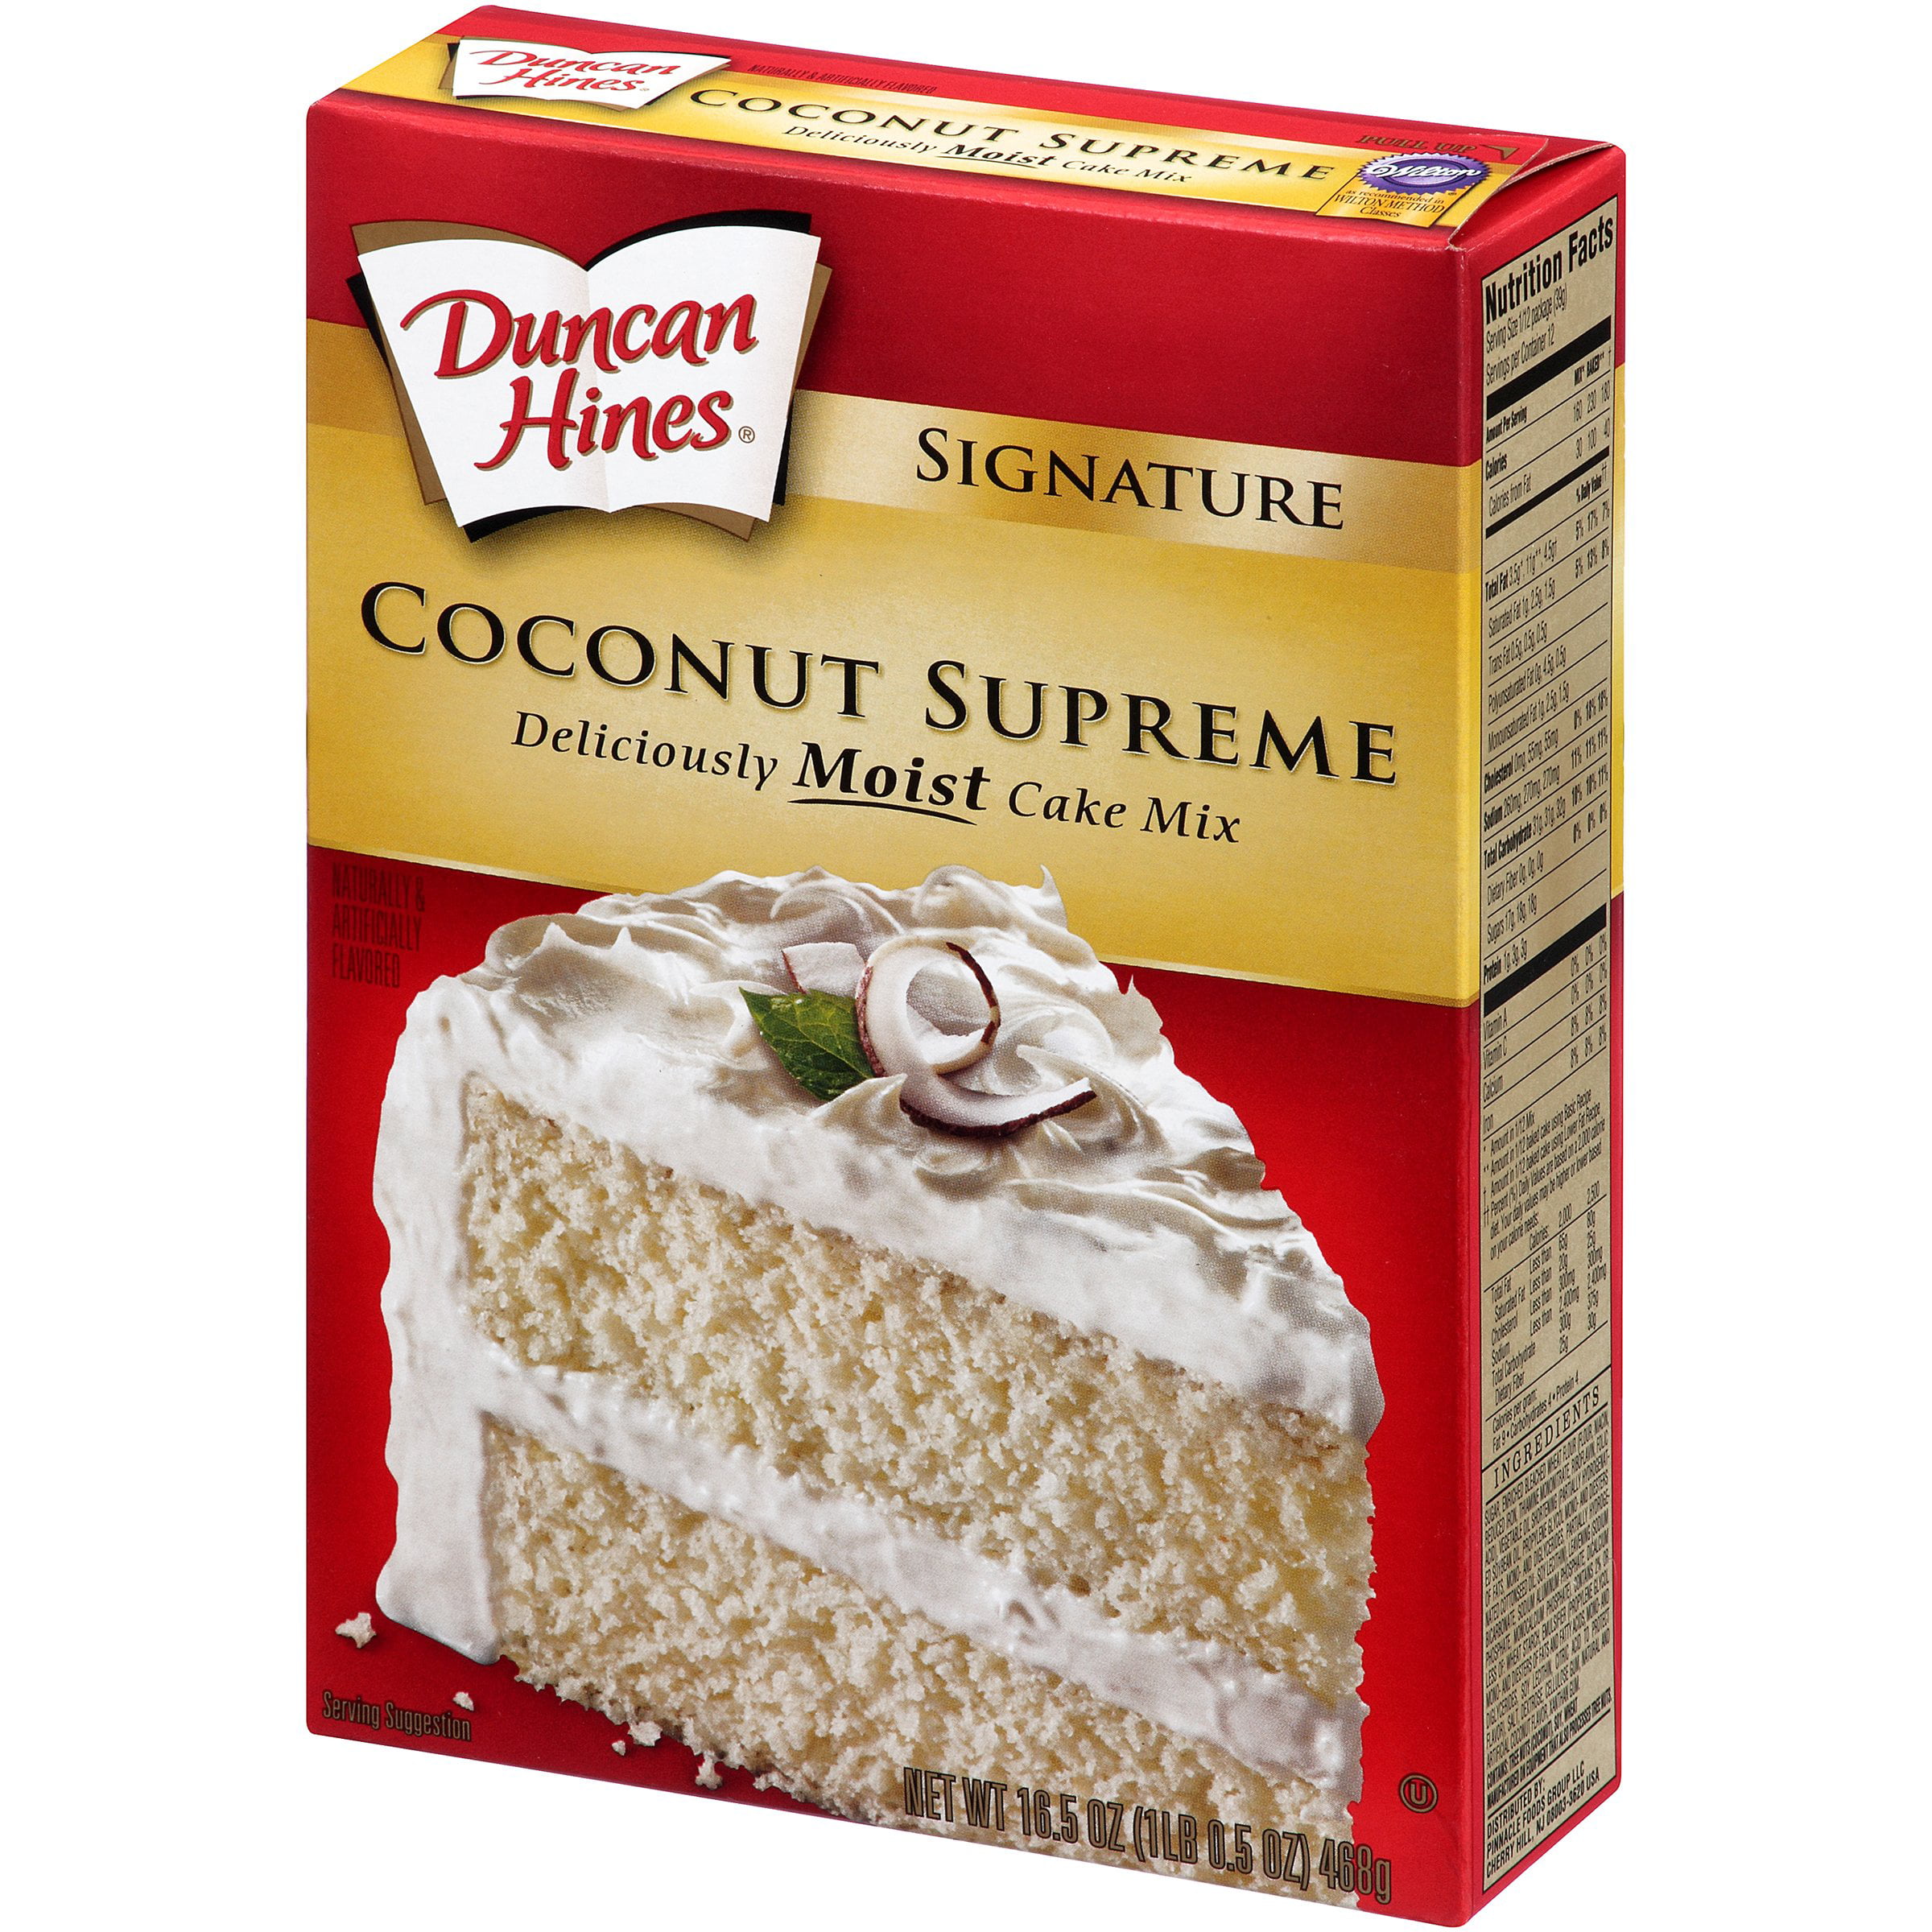 Signature Coconut Supreme Cake Mix 16 5